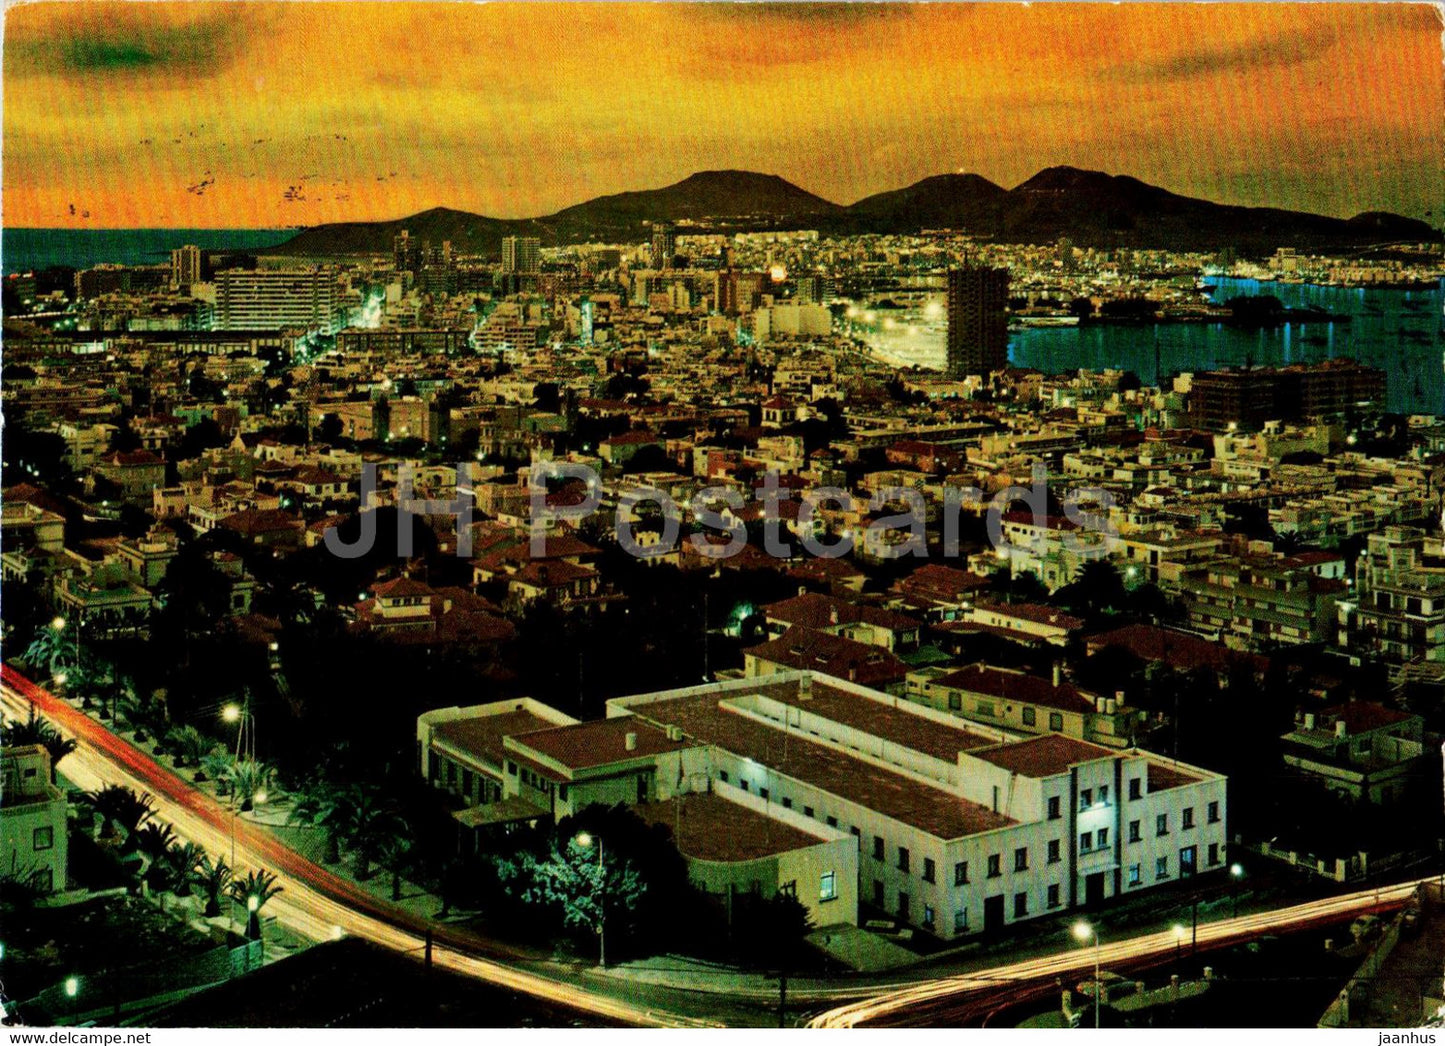 Las Palmas de Gran Canaria - Vista panoramica al atardecer - Panoramic view in sunset - 2298 - Spain - used - JH Postcards